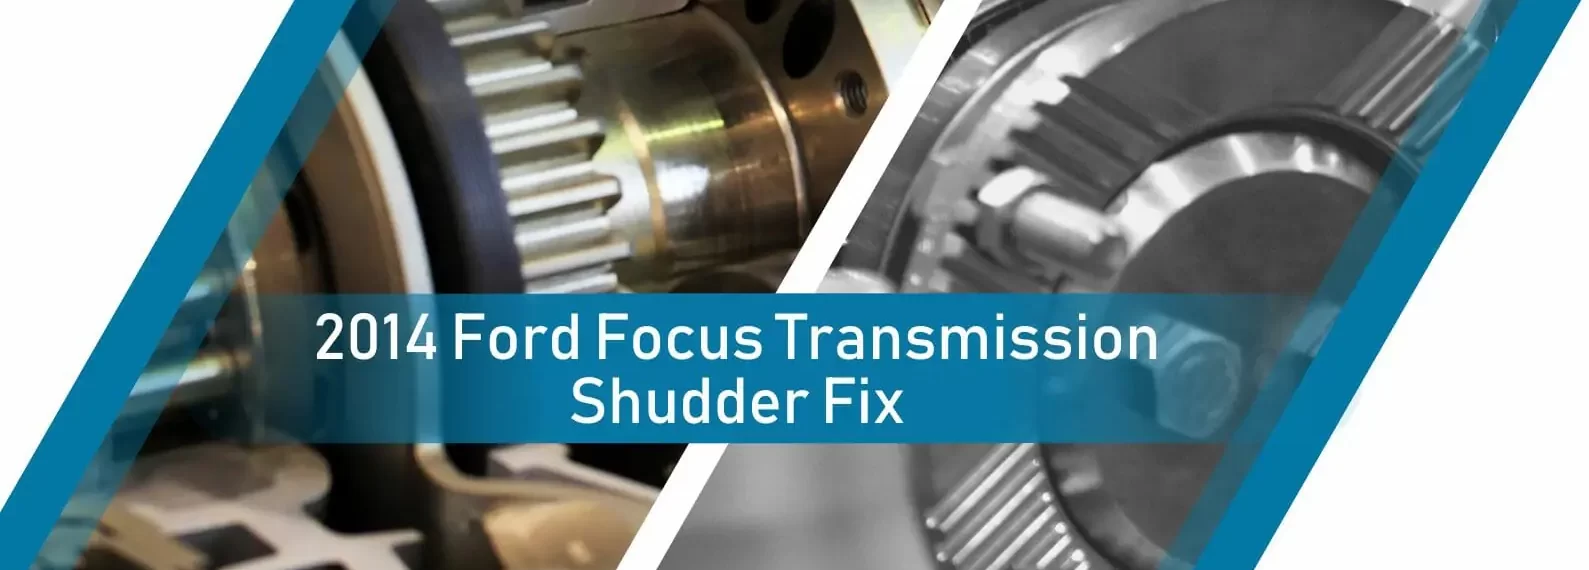 2014 Ford Focus Transmission Shudder Fix: A Complete Guide